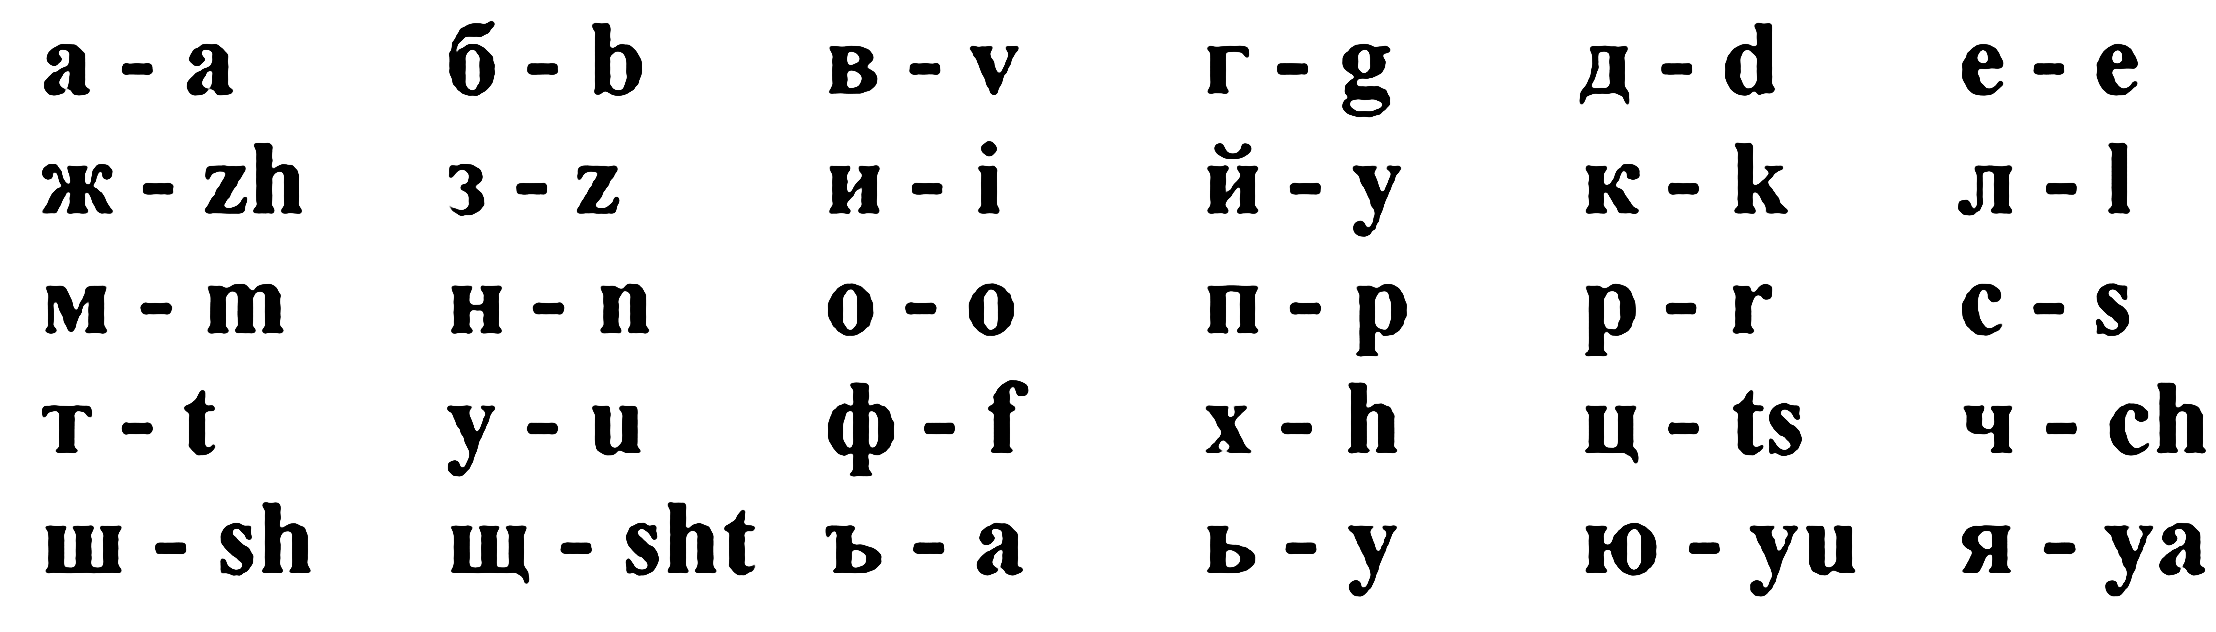 Как перейти на латинский шрифт на клавиатуре